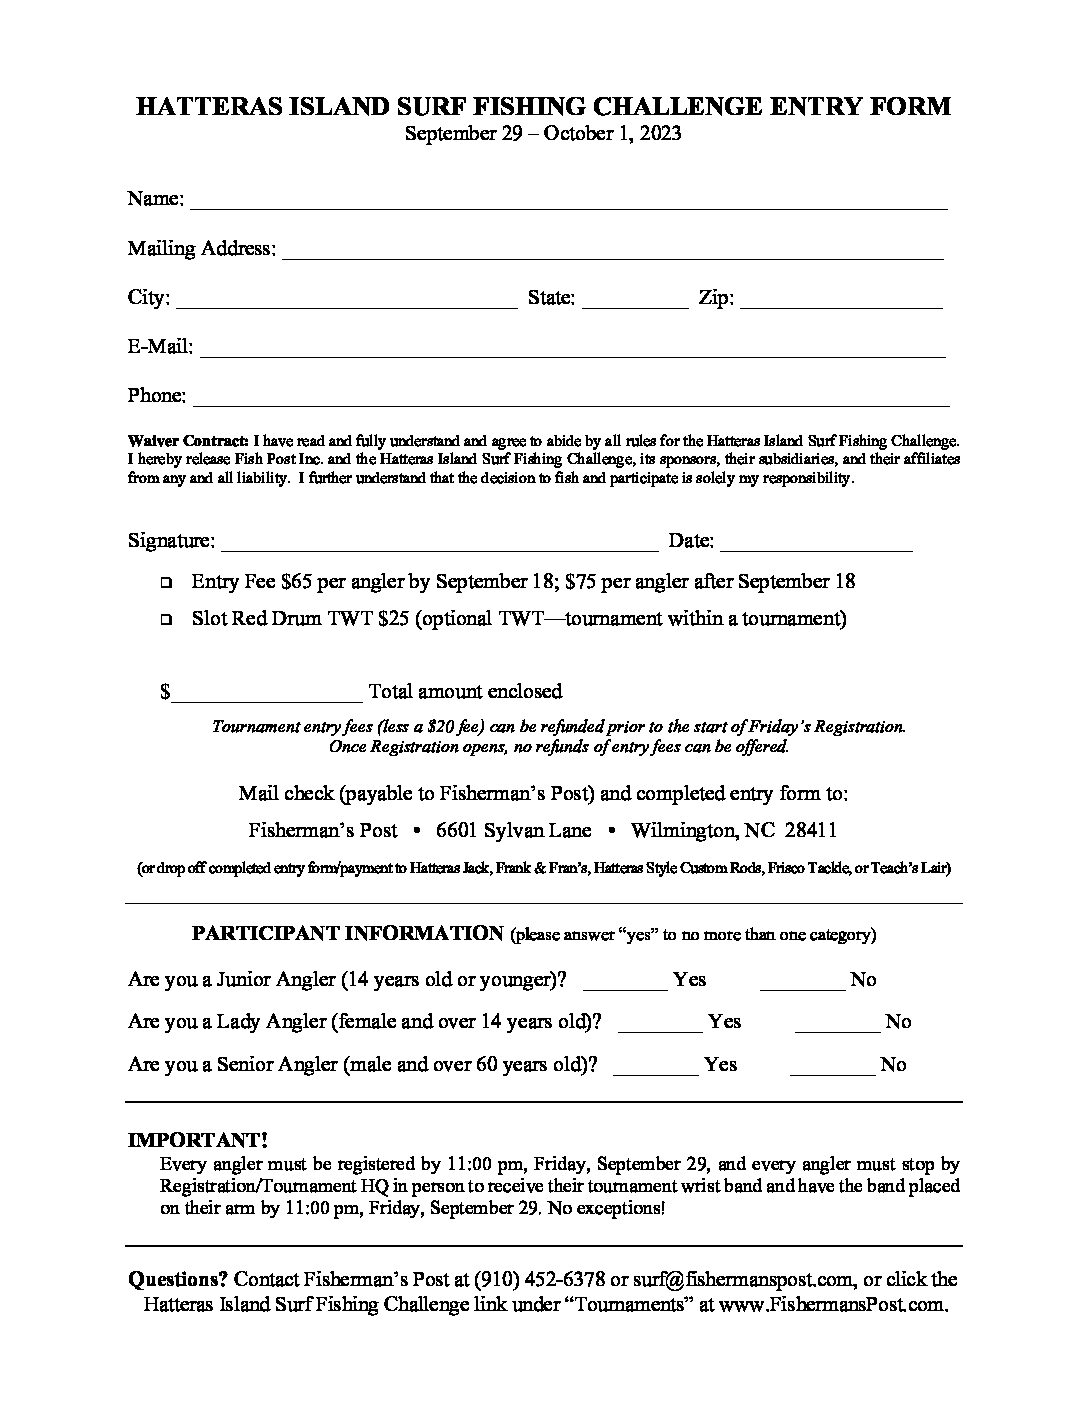 2023 Hatteras Island Surf Fishing Challenge Print Entry Form